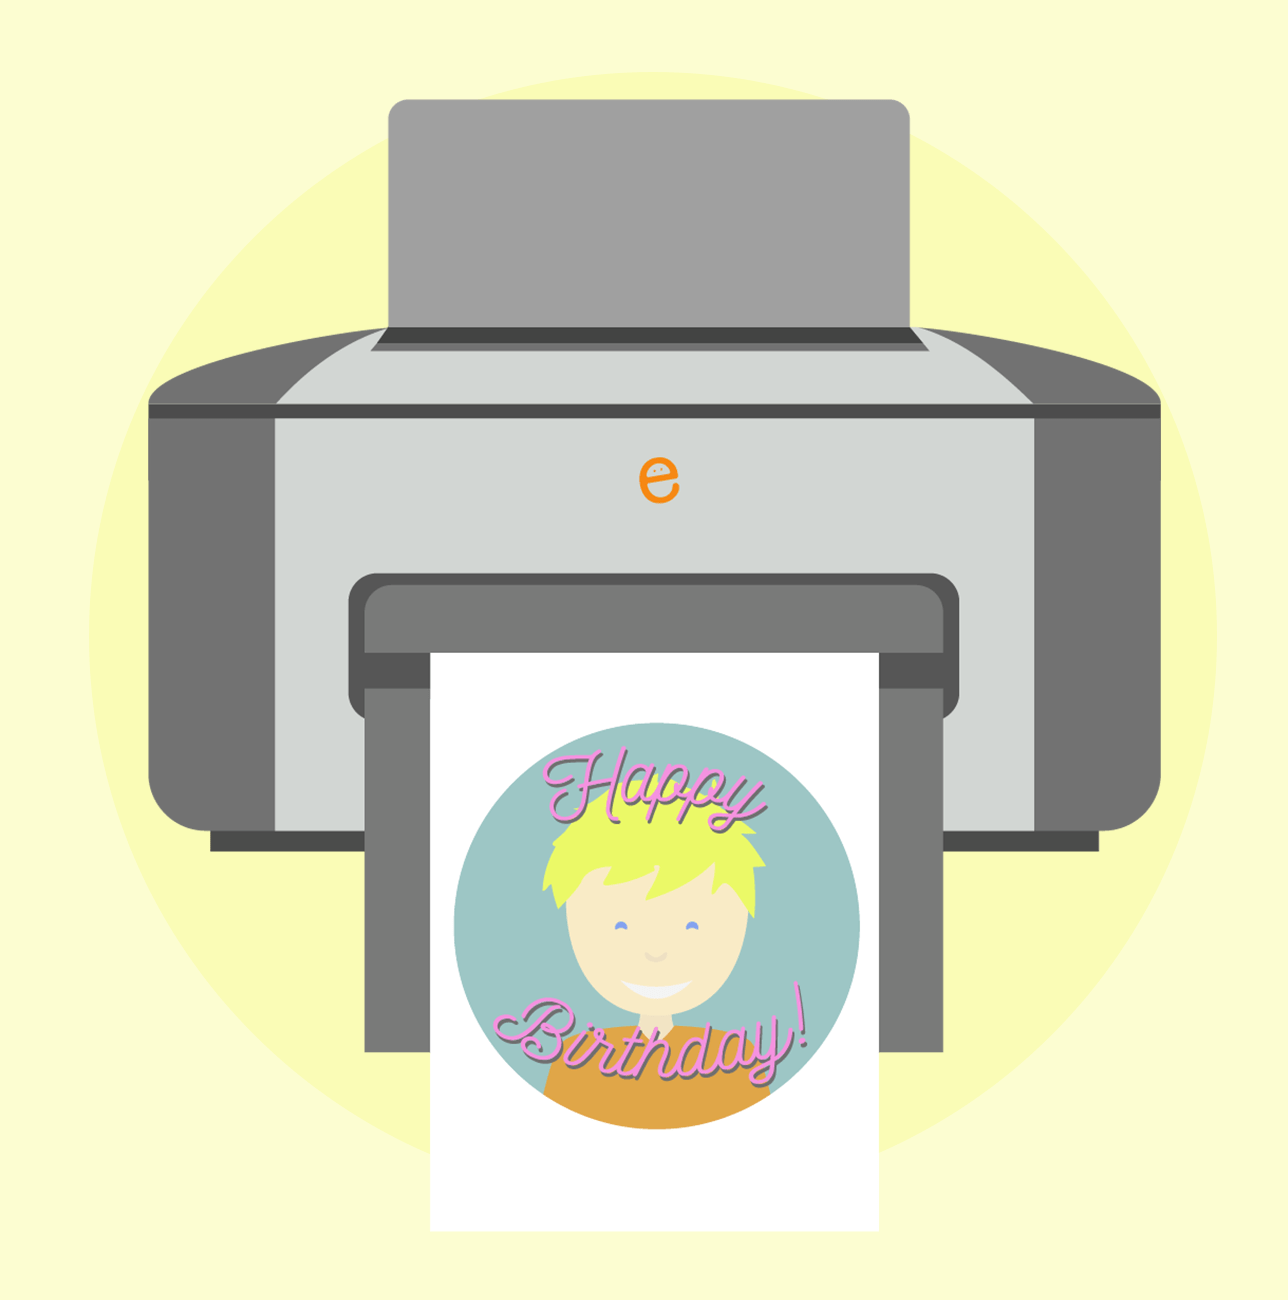 image of printer with Happy Birthday